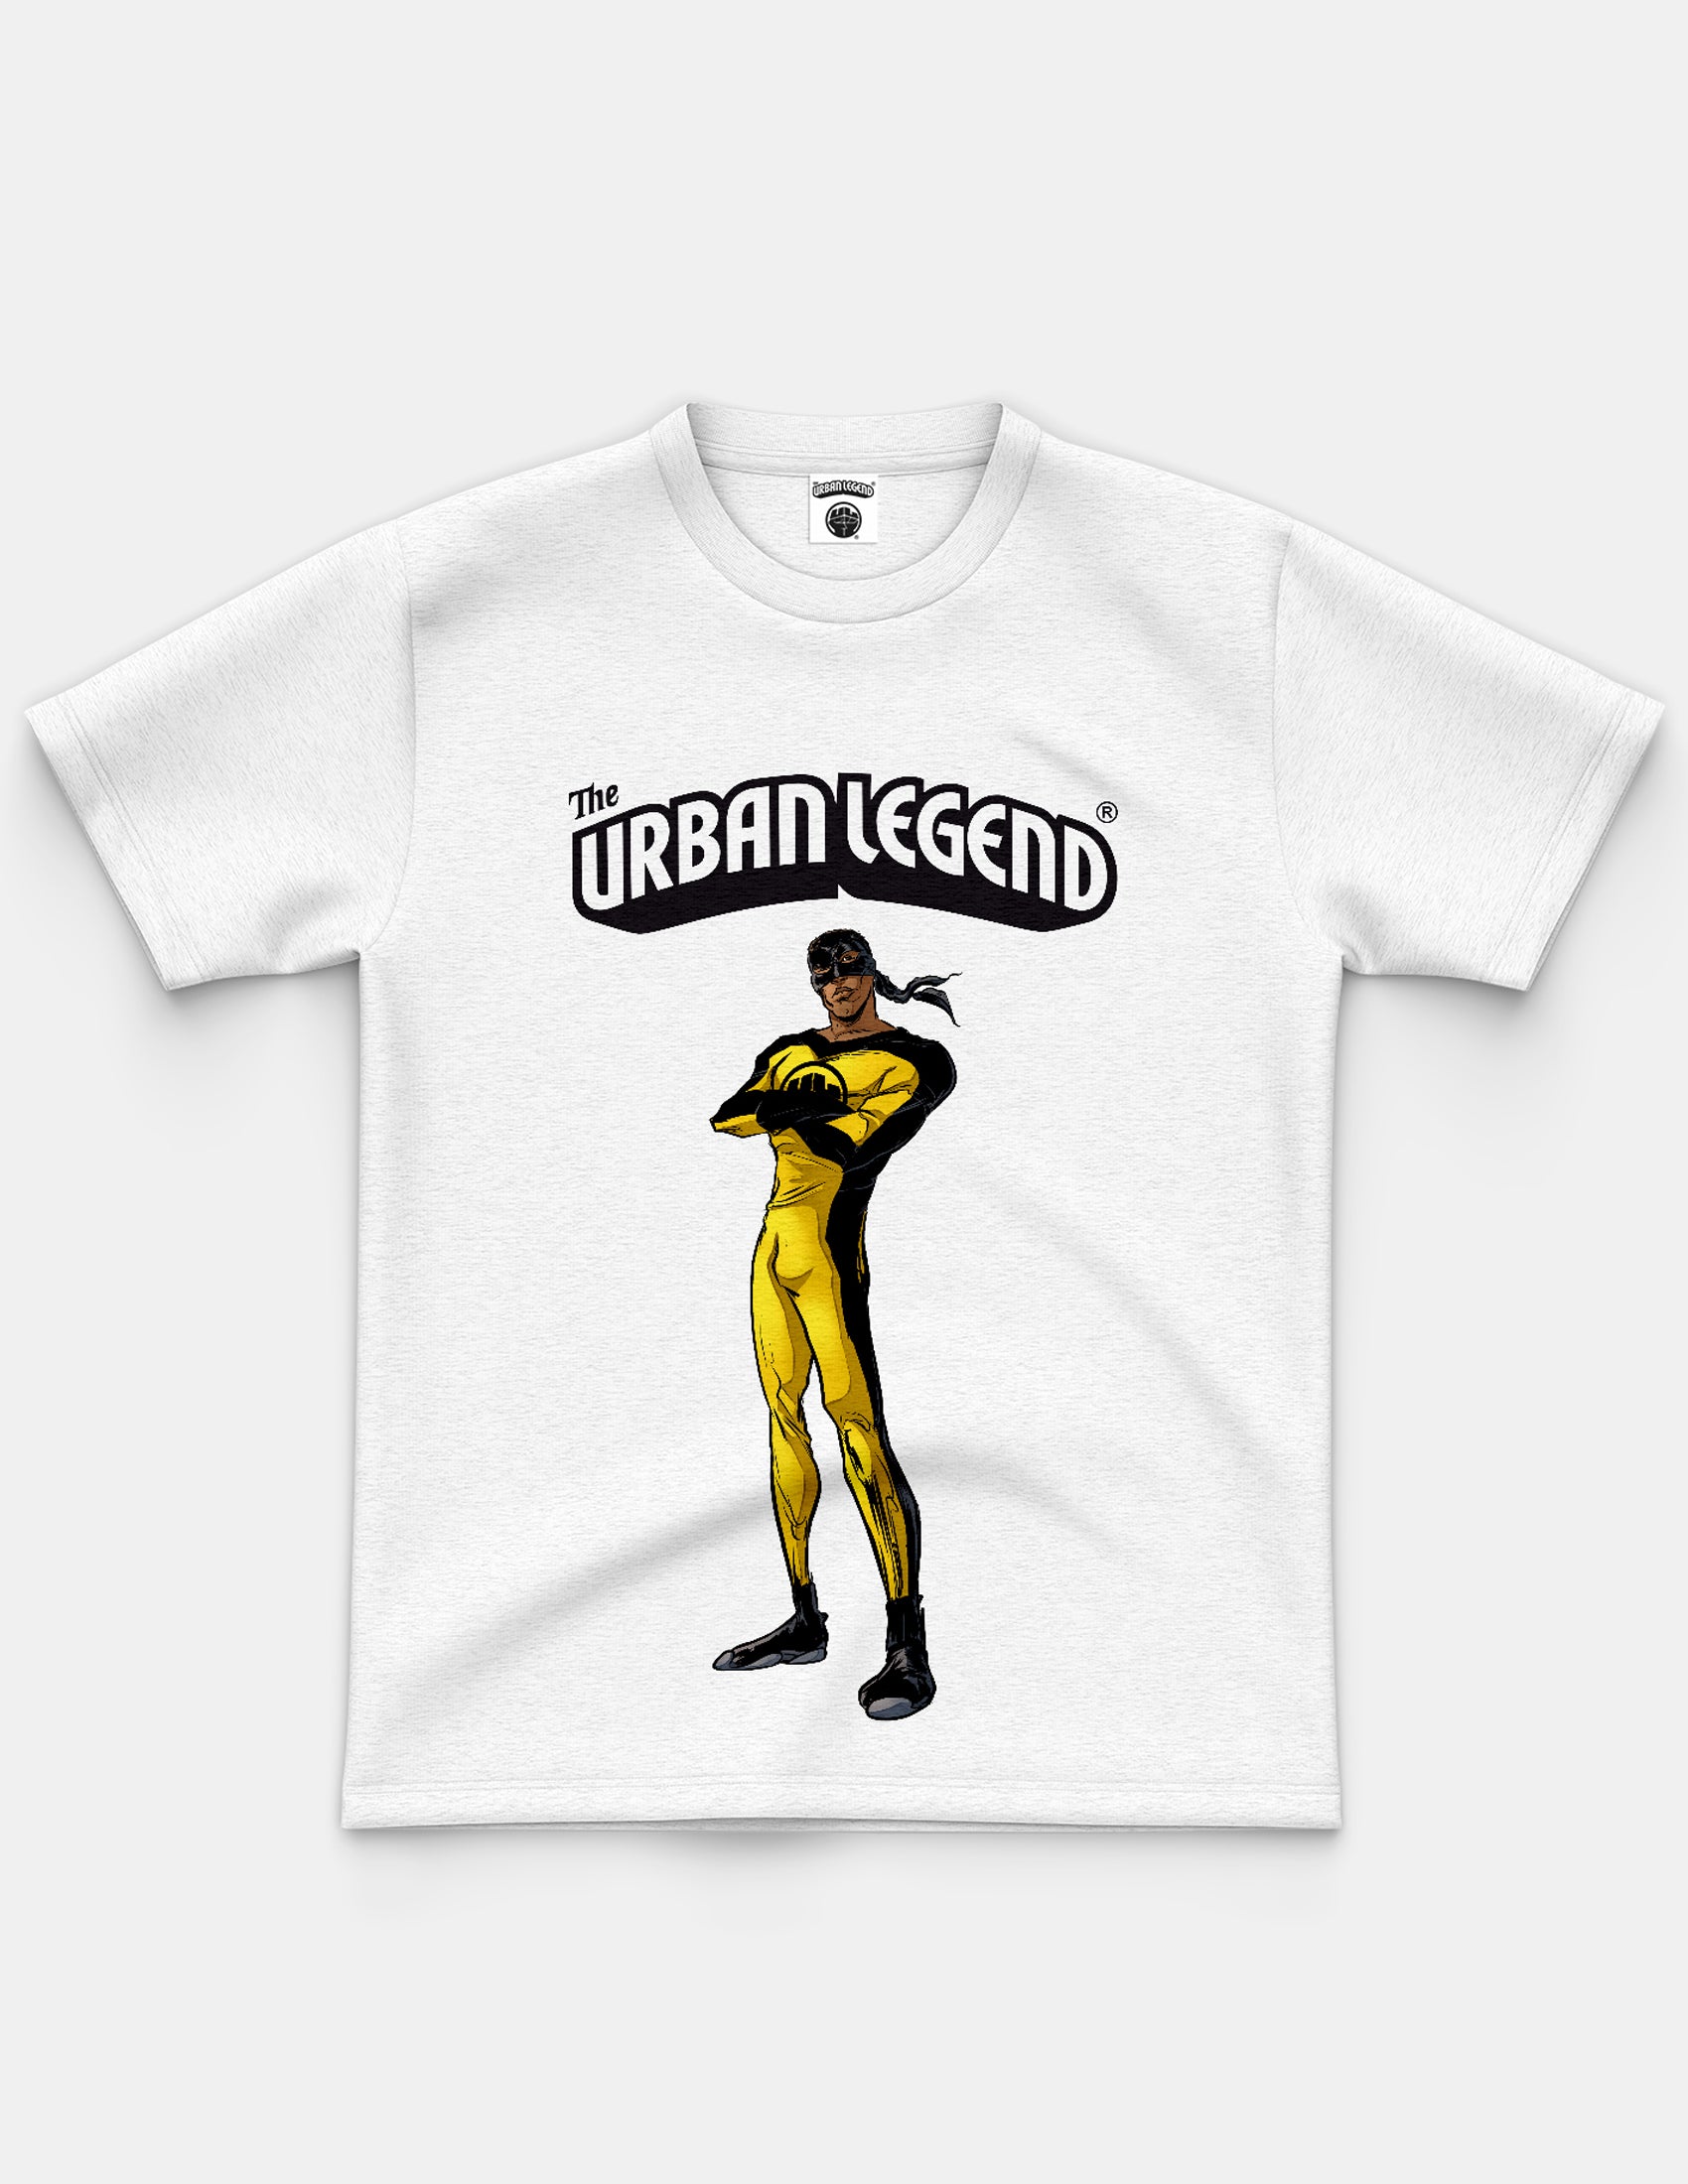 The Urban Legend - Profile t-shirt